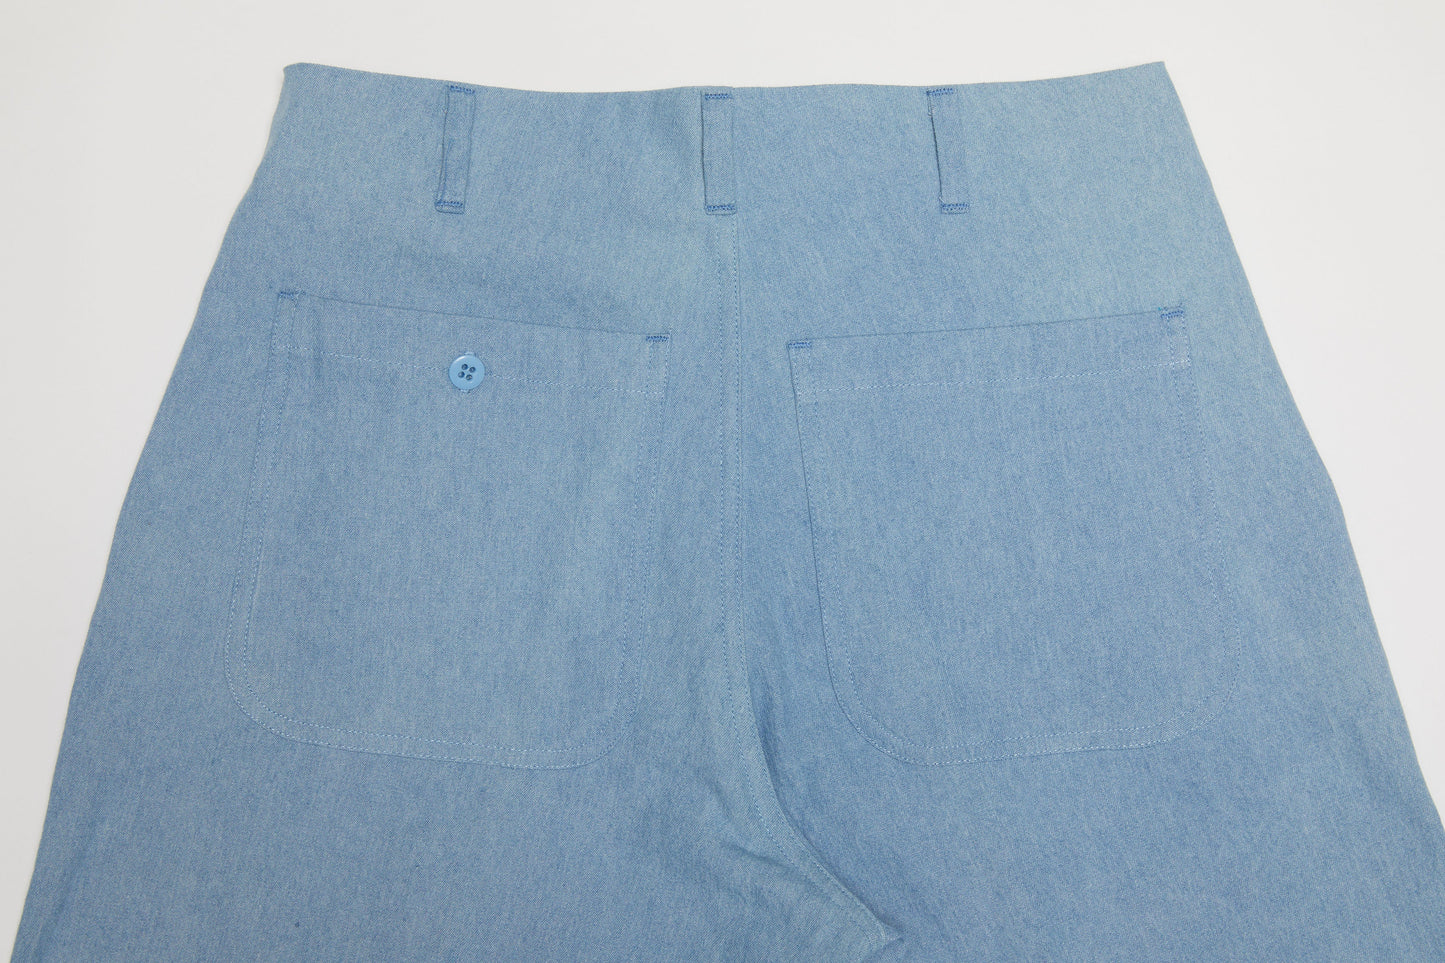 Peg-top Pants (Light Blue)